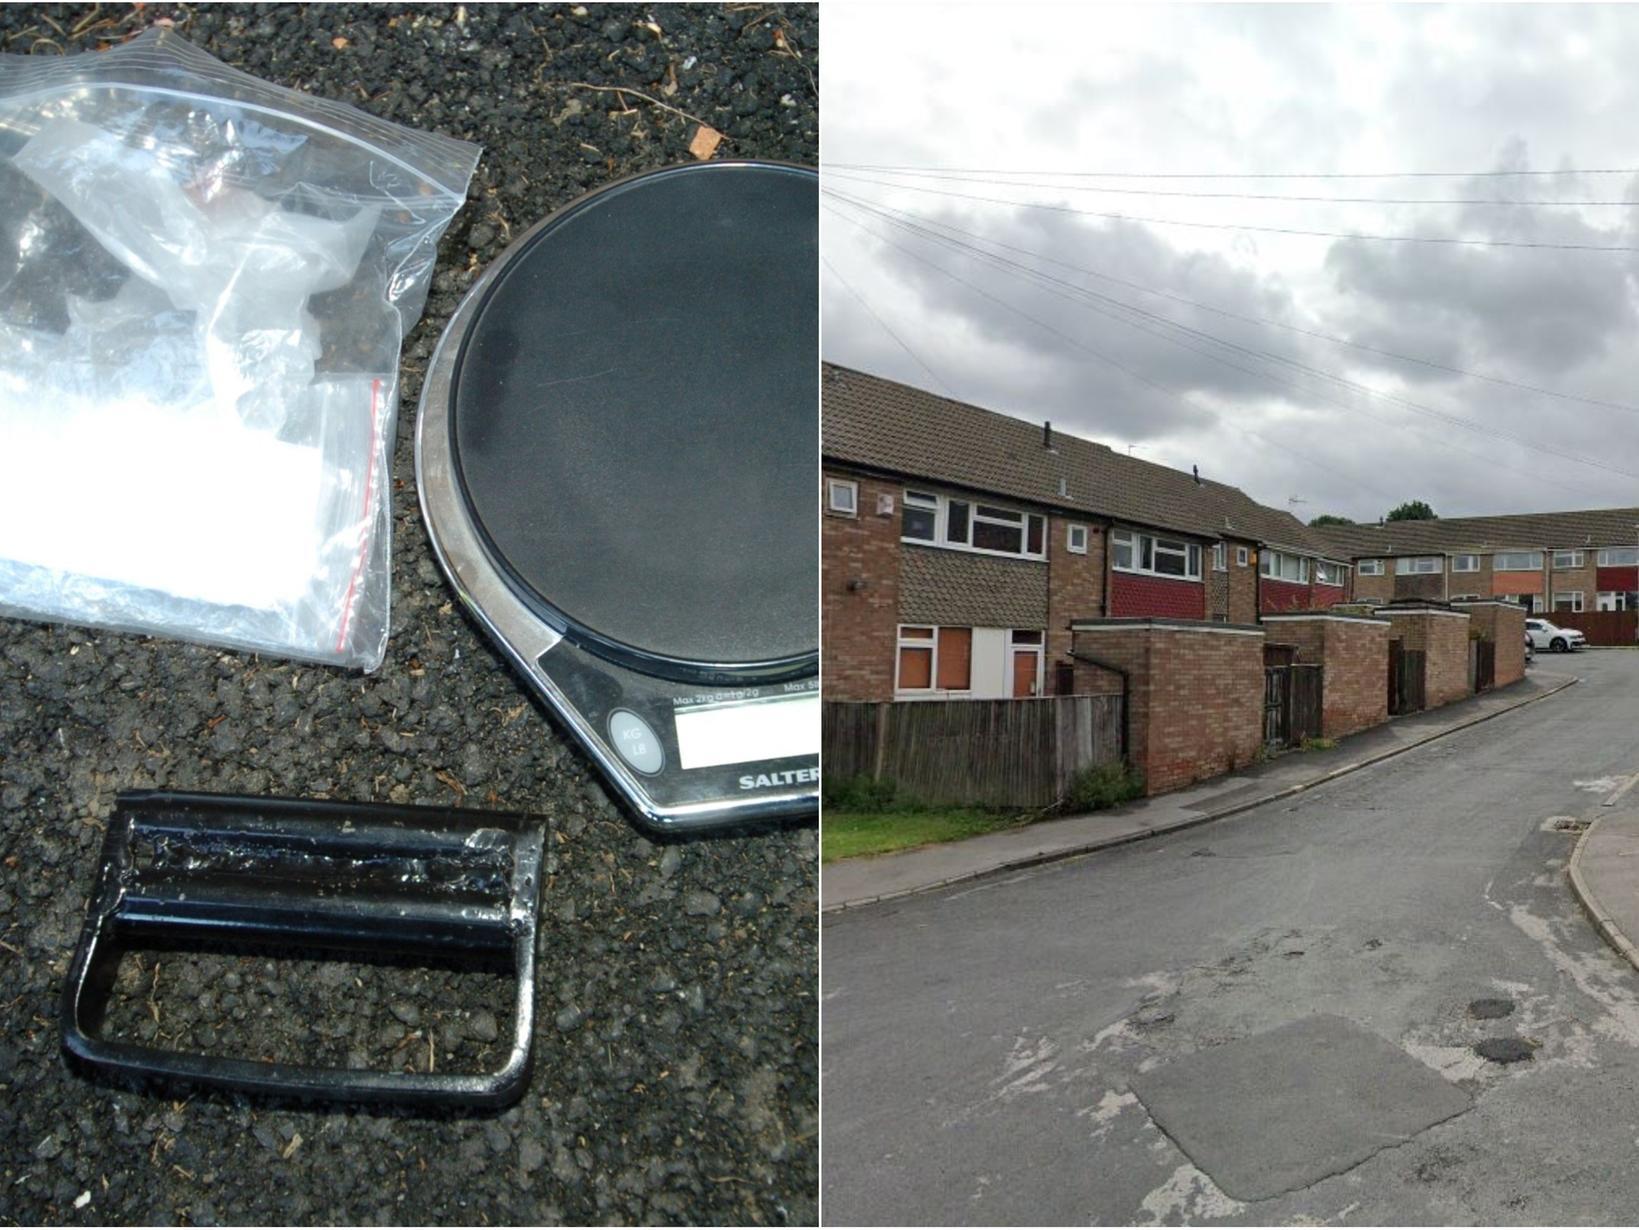 The drugs crime hotspots of Leeds revealed